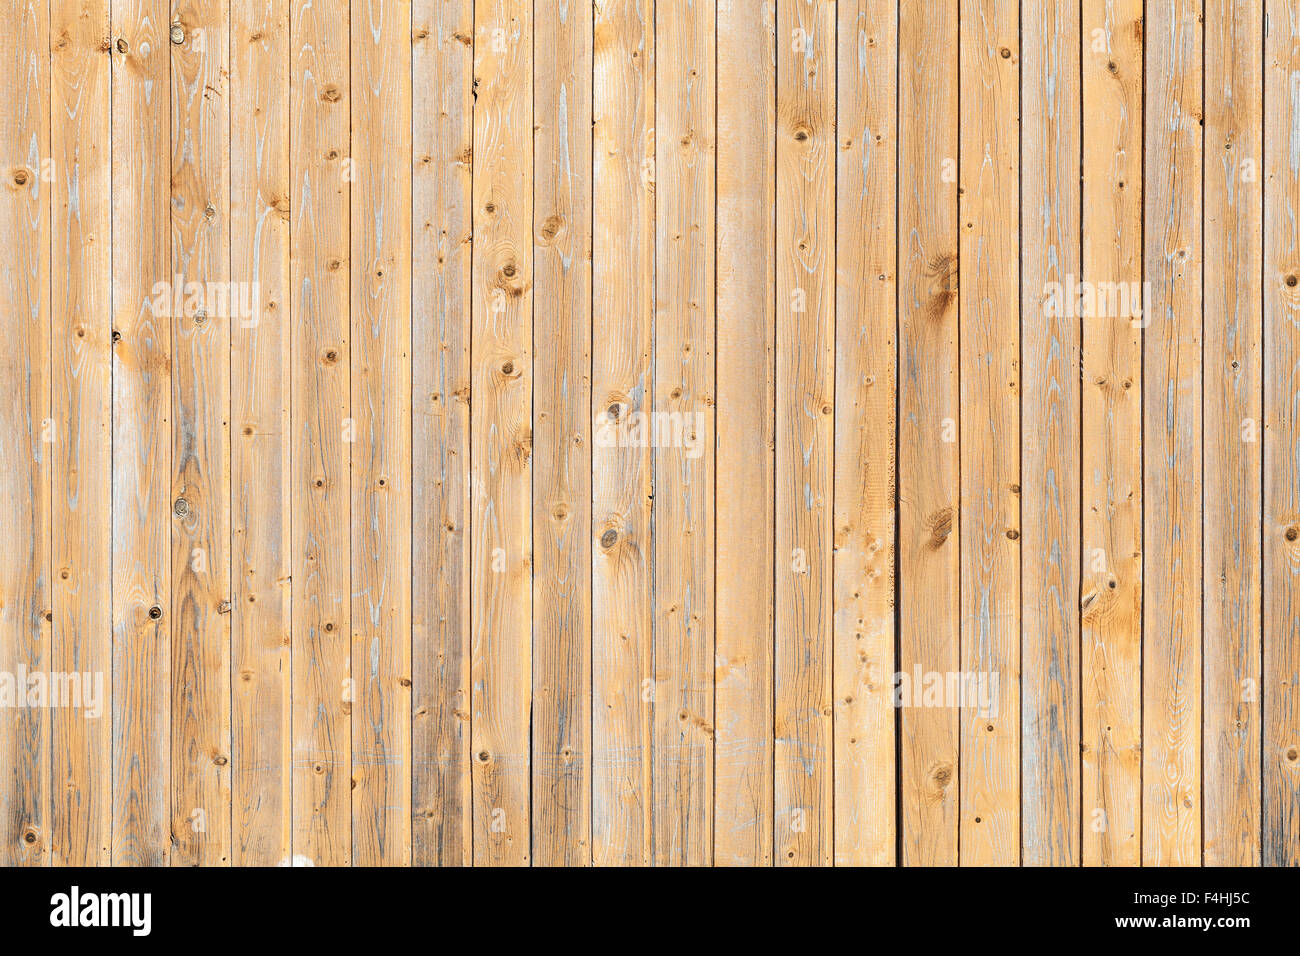 Holzwand Foto Hintergrundtextur, vertikalen Planken Muster Stockfoto